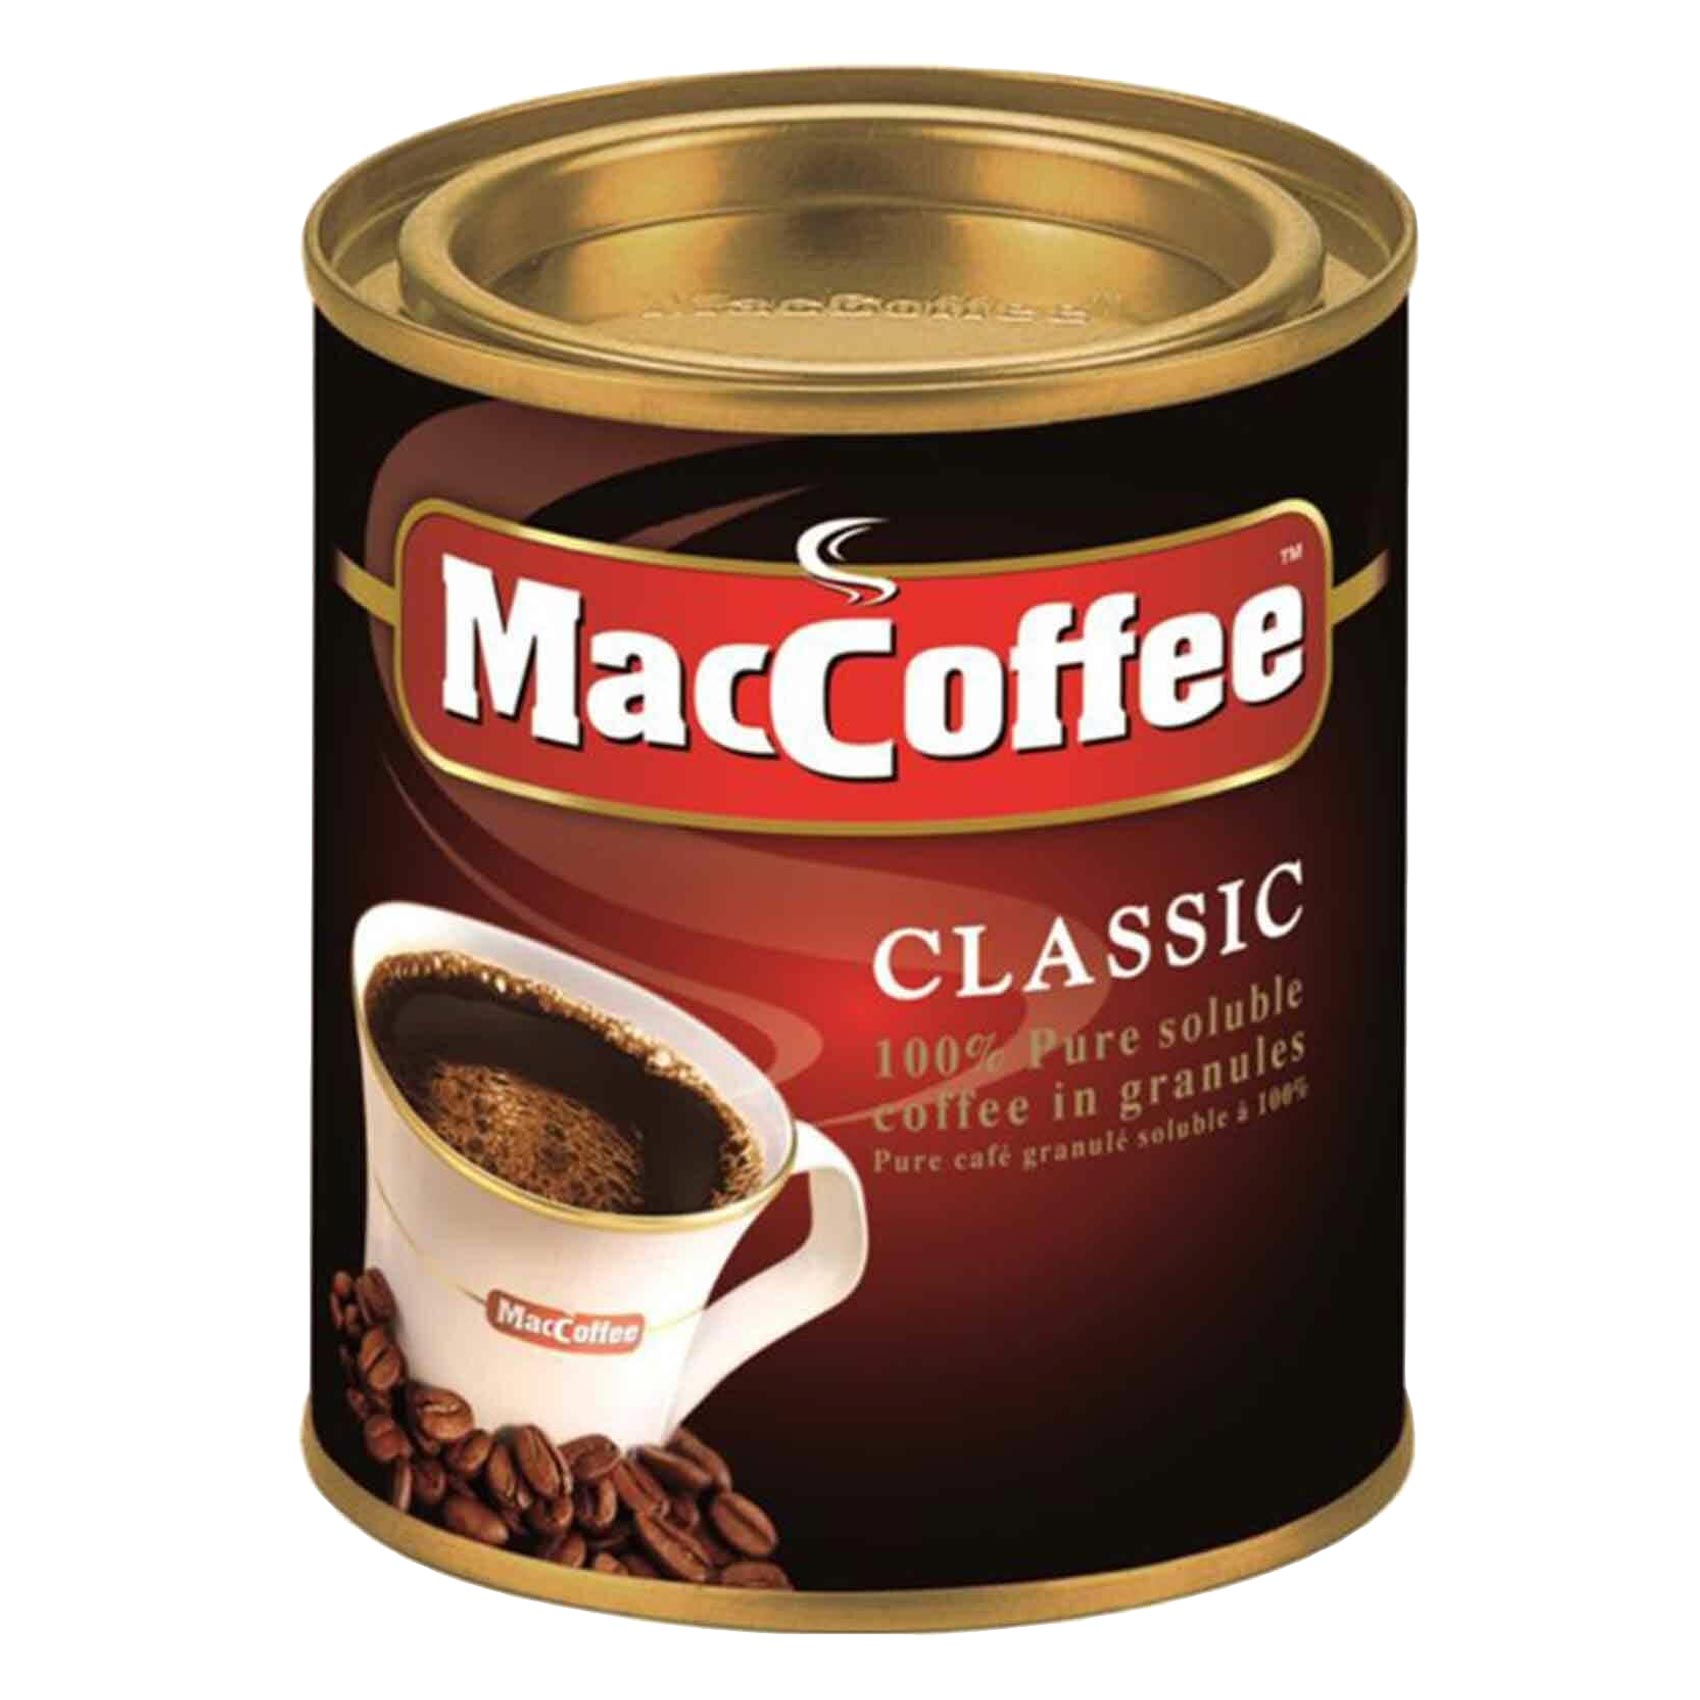 Maccoffee Classic Coffee 200g